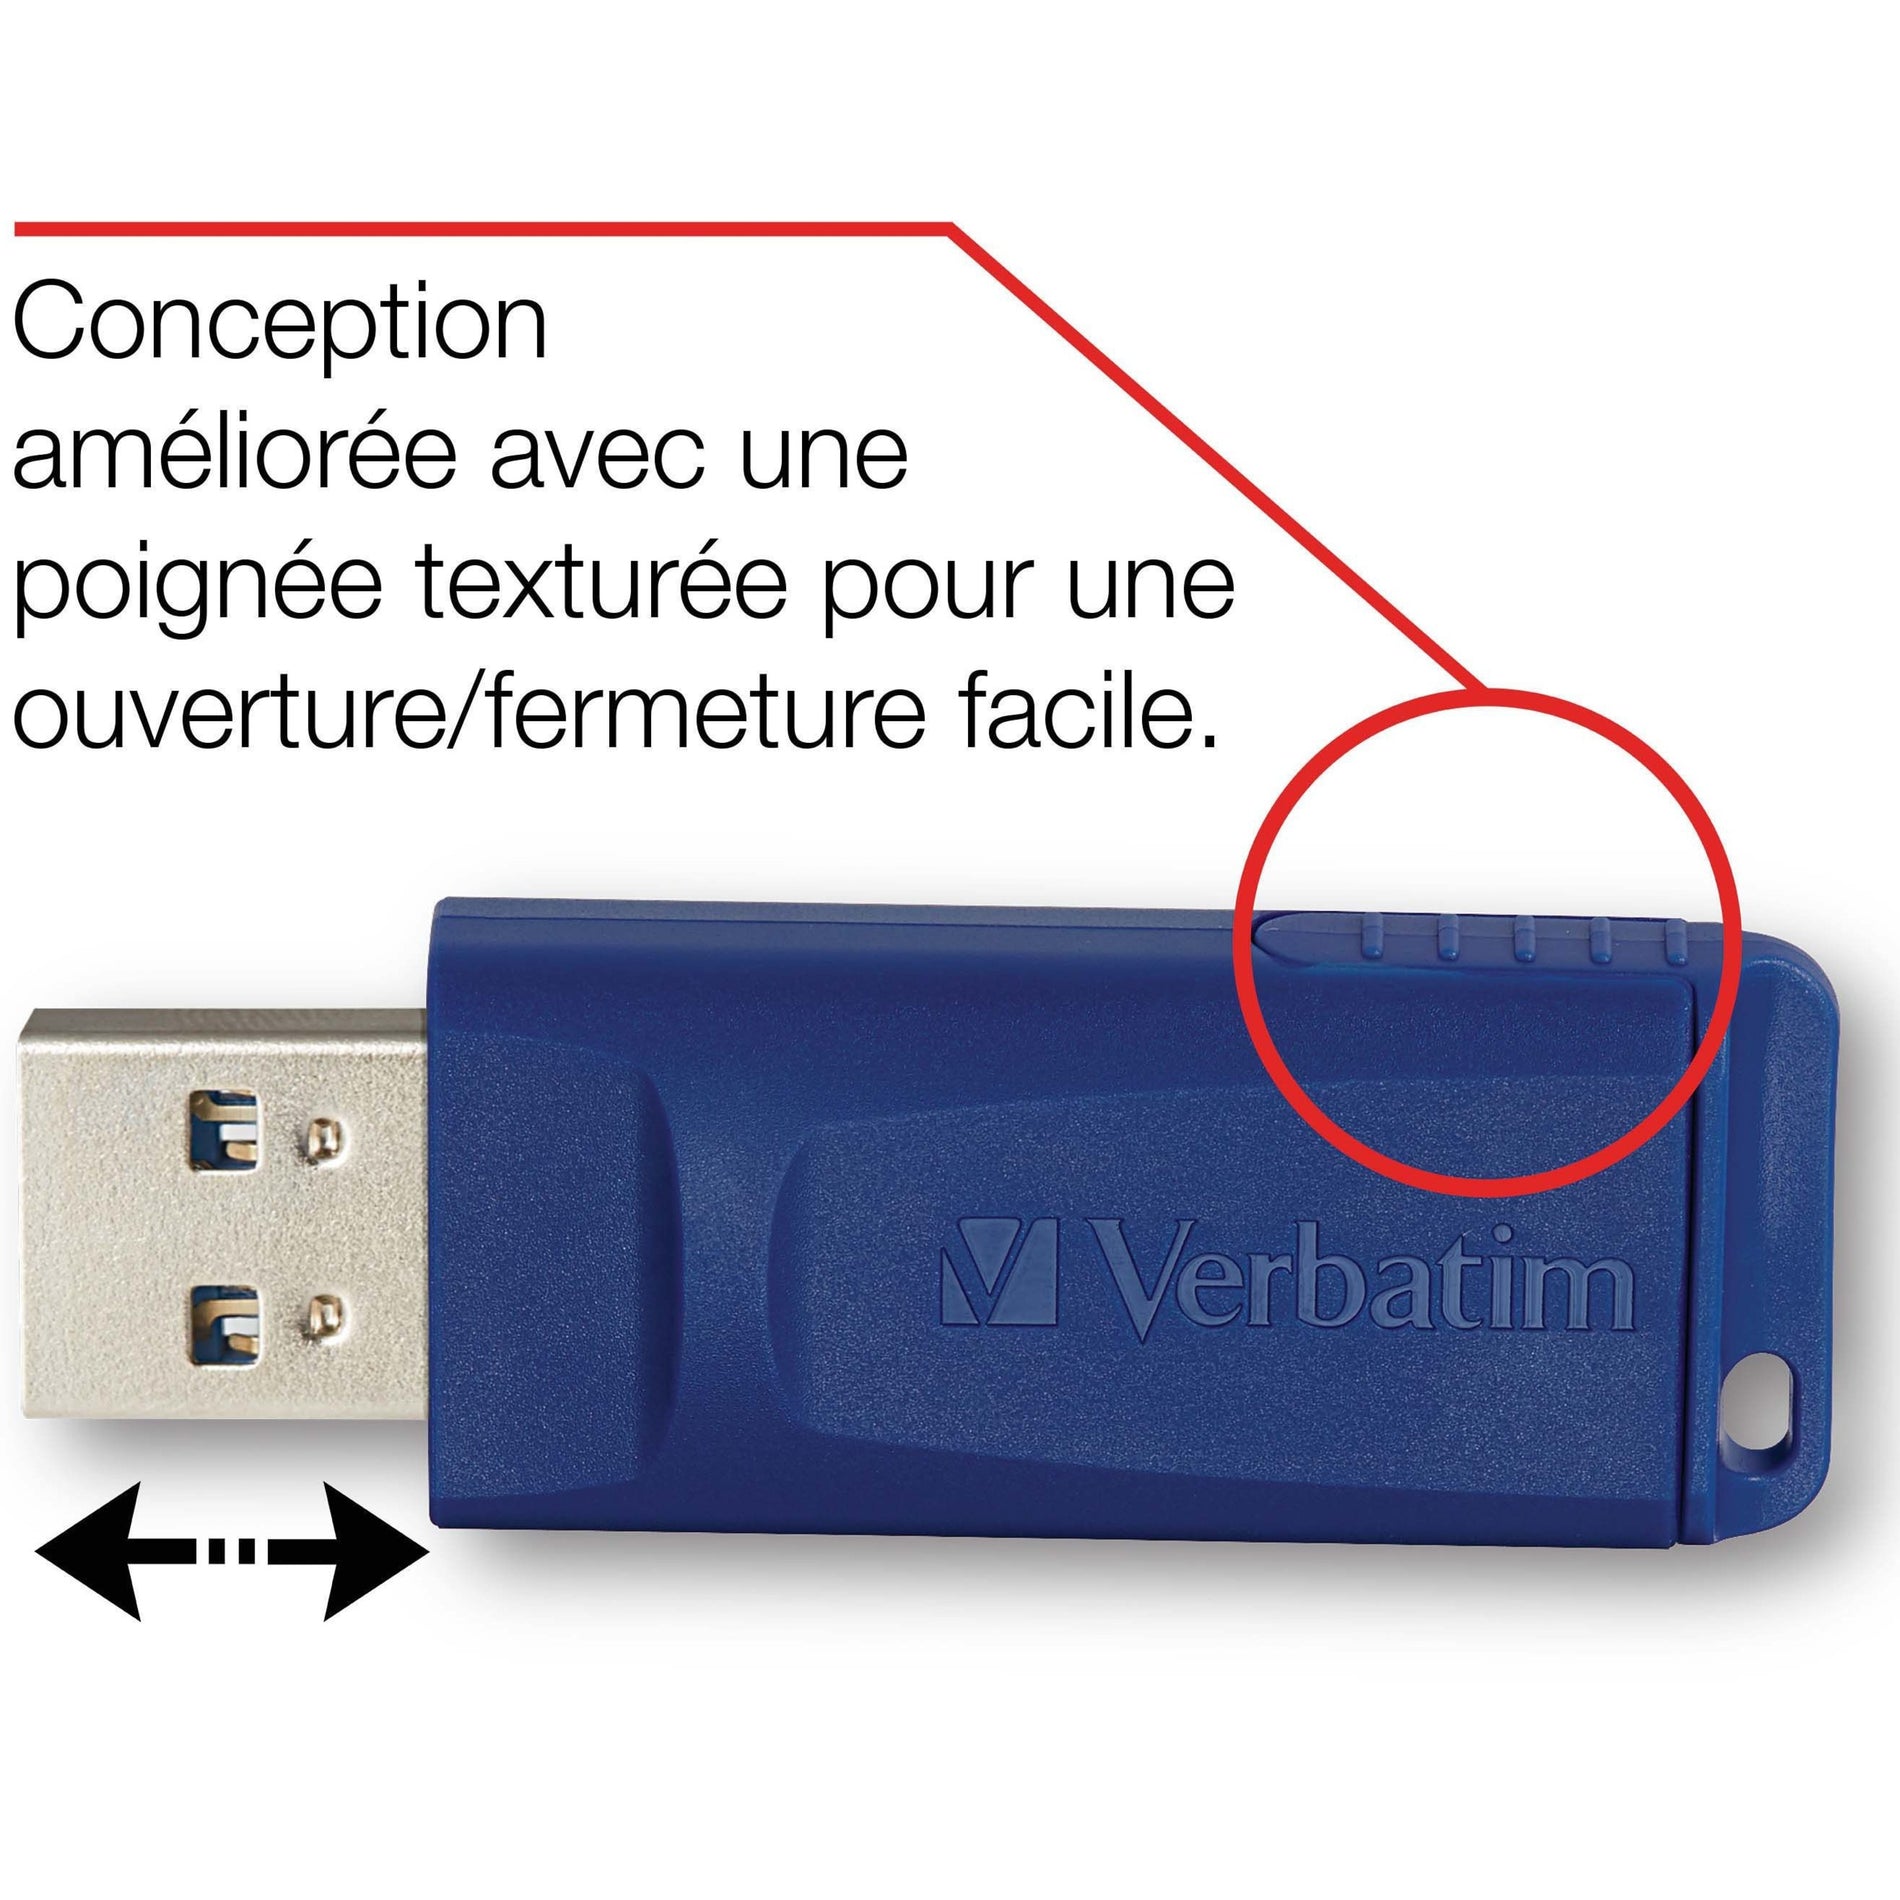 Verbatim 97087 Classic Capless USB Drive, 4GB Blue, Retractable, Antimicrobial